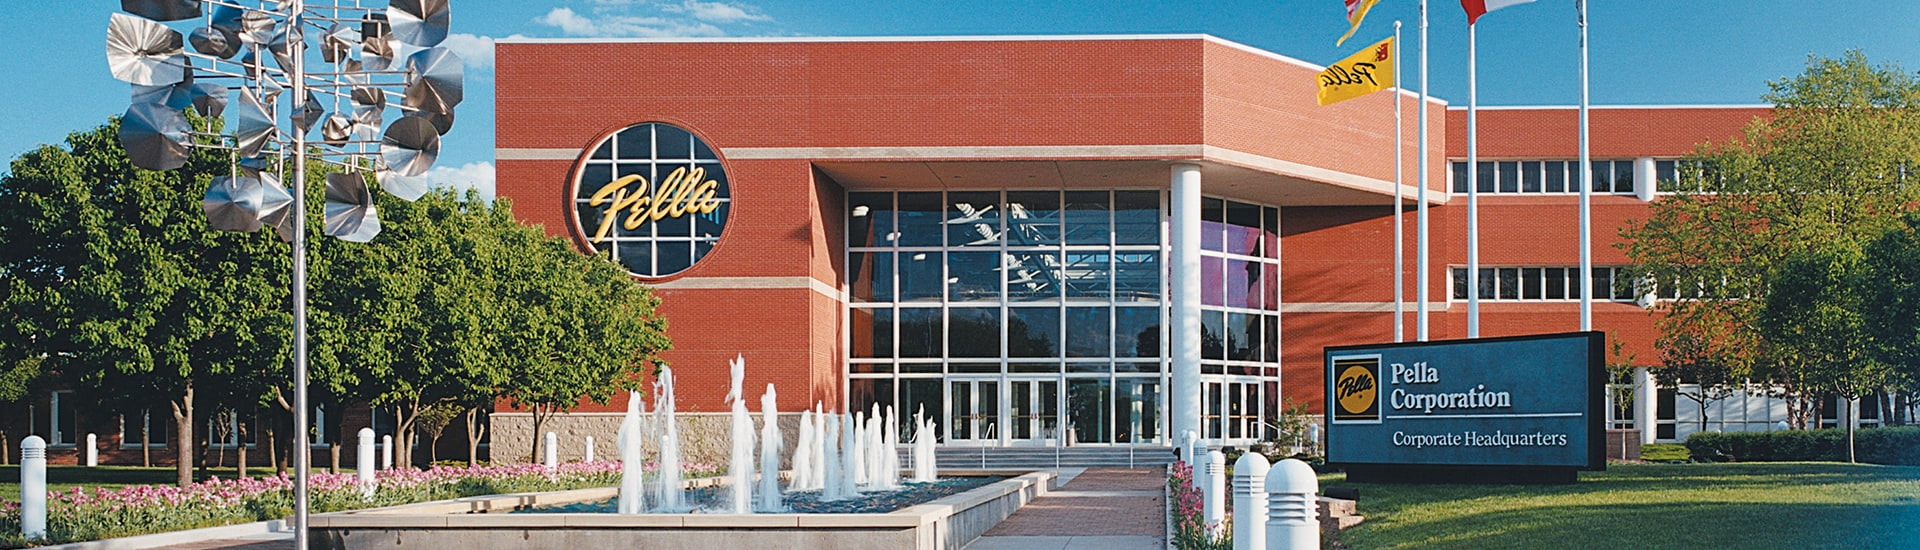 Pella corporation headquarters in Pella, Iowa.